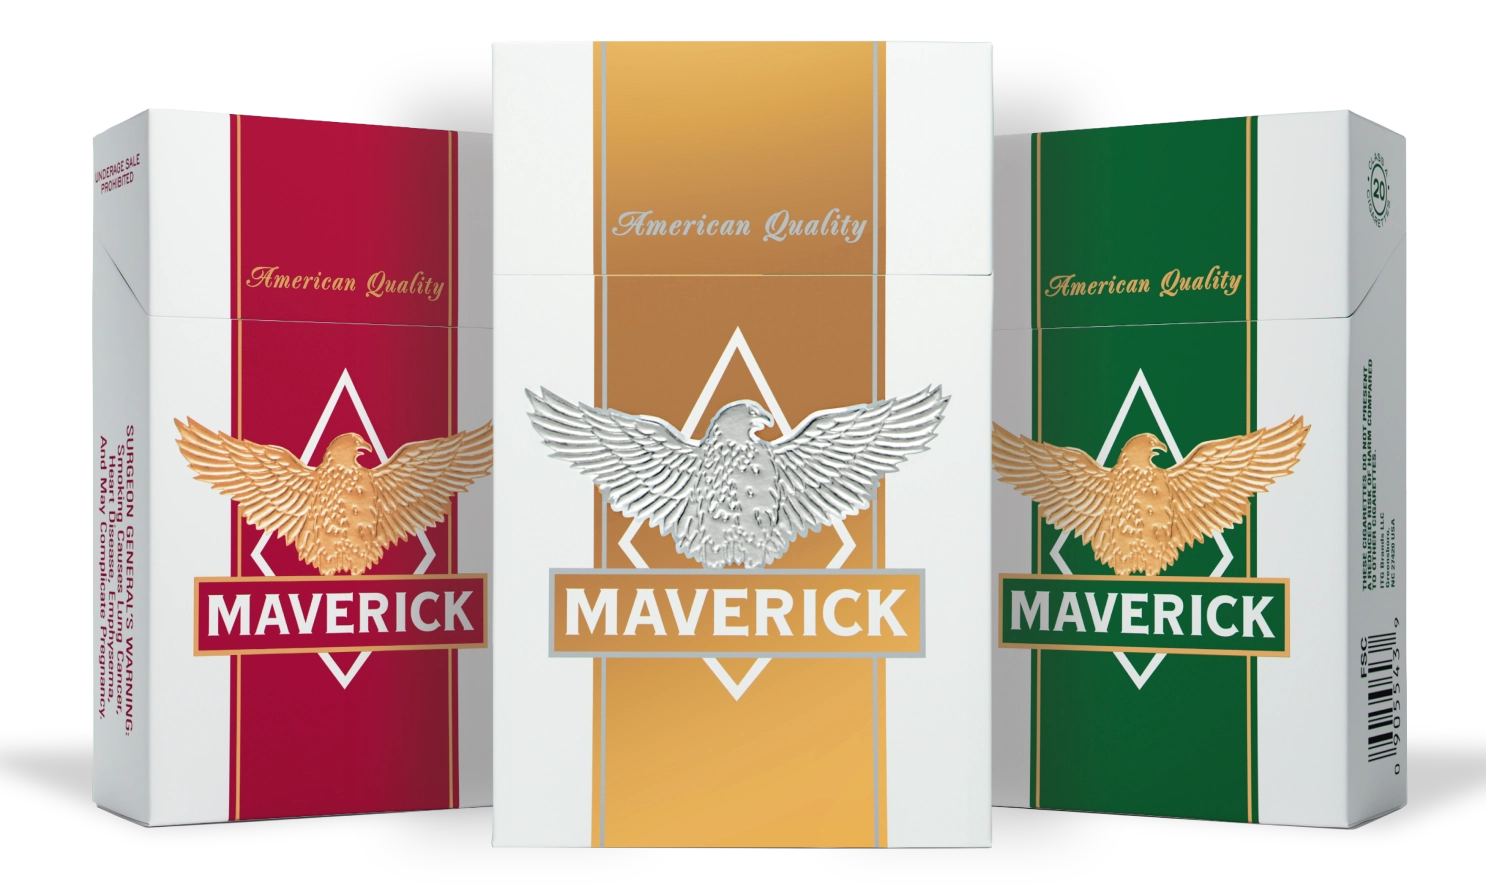 3 Packs Of Maverick Cigarettes